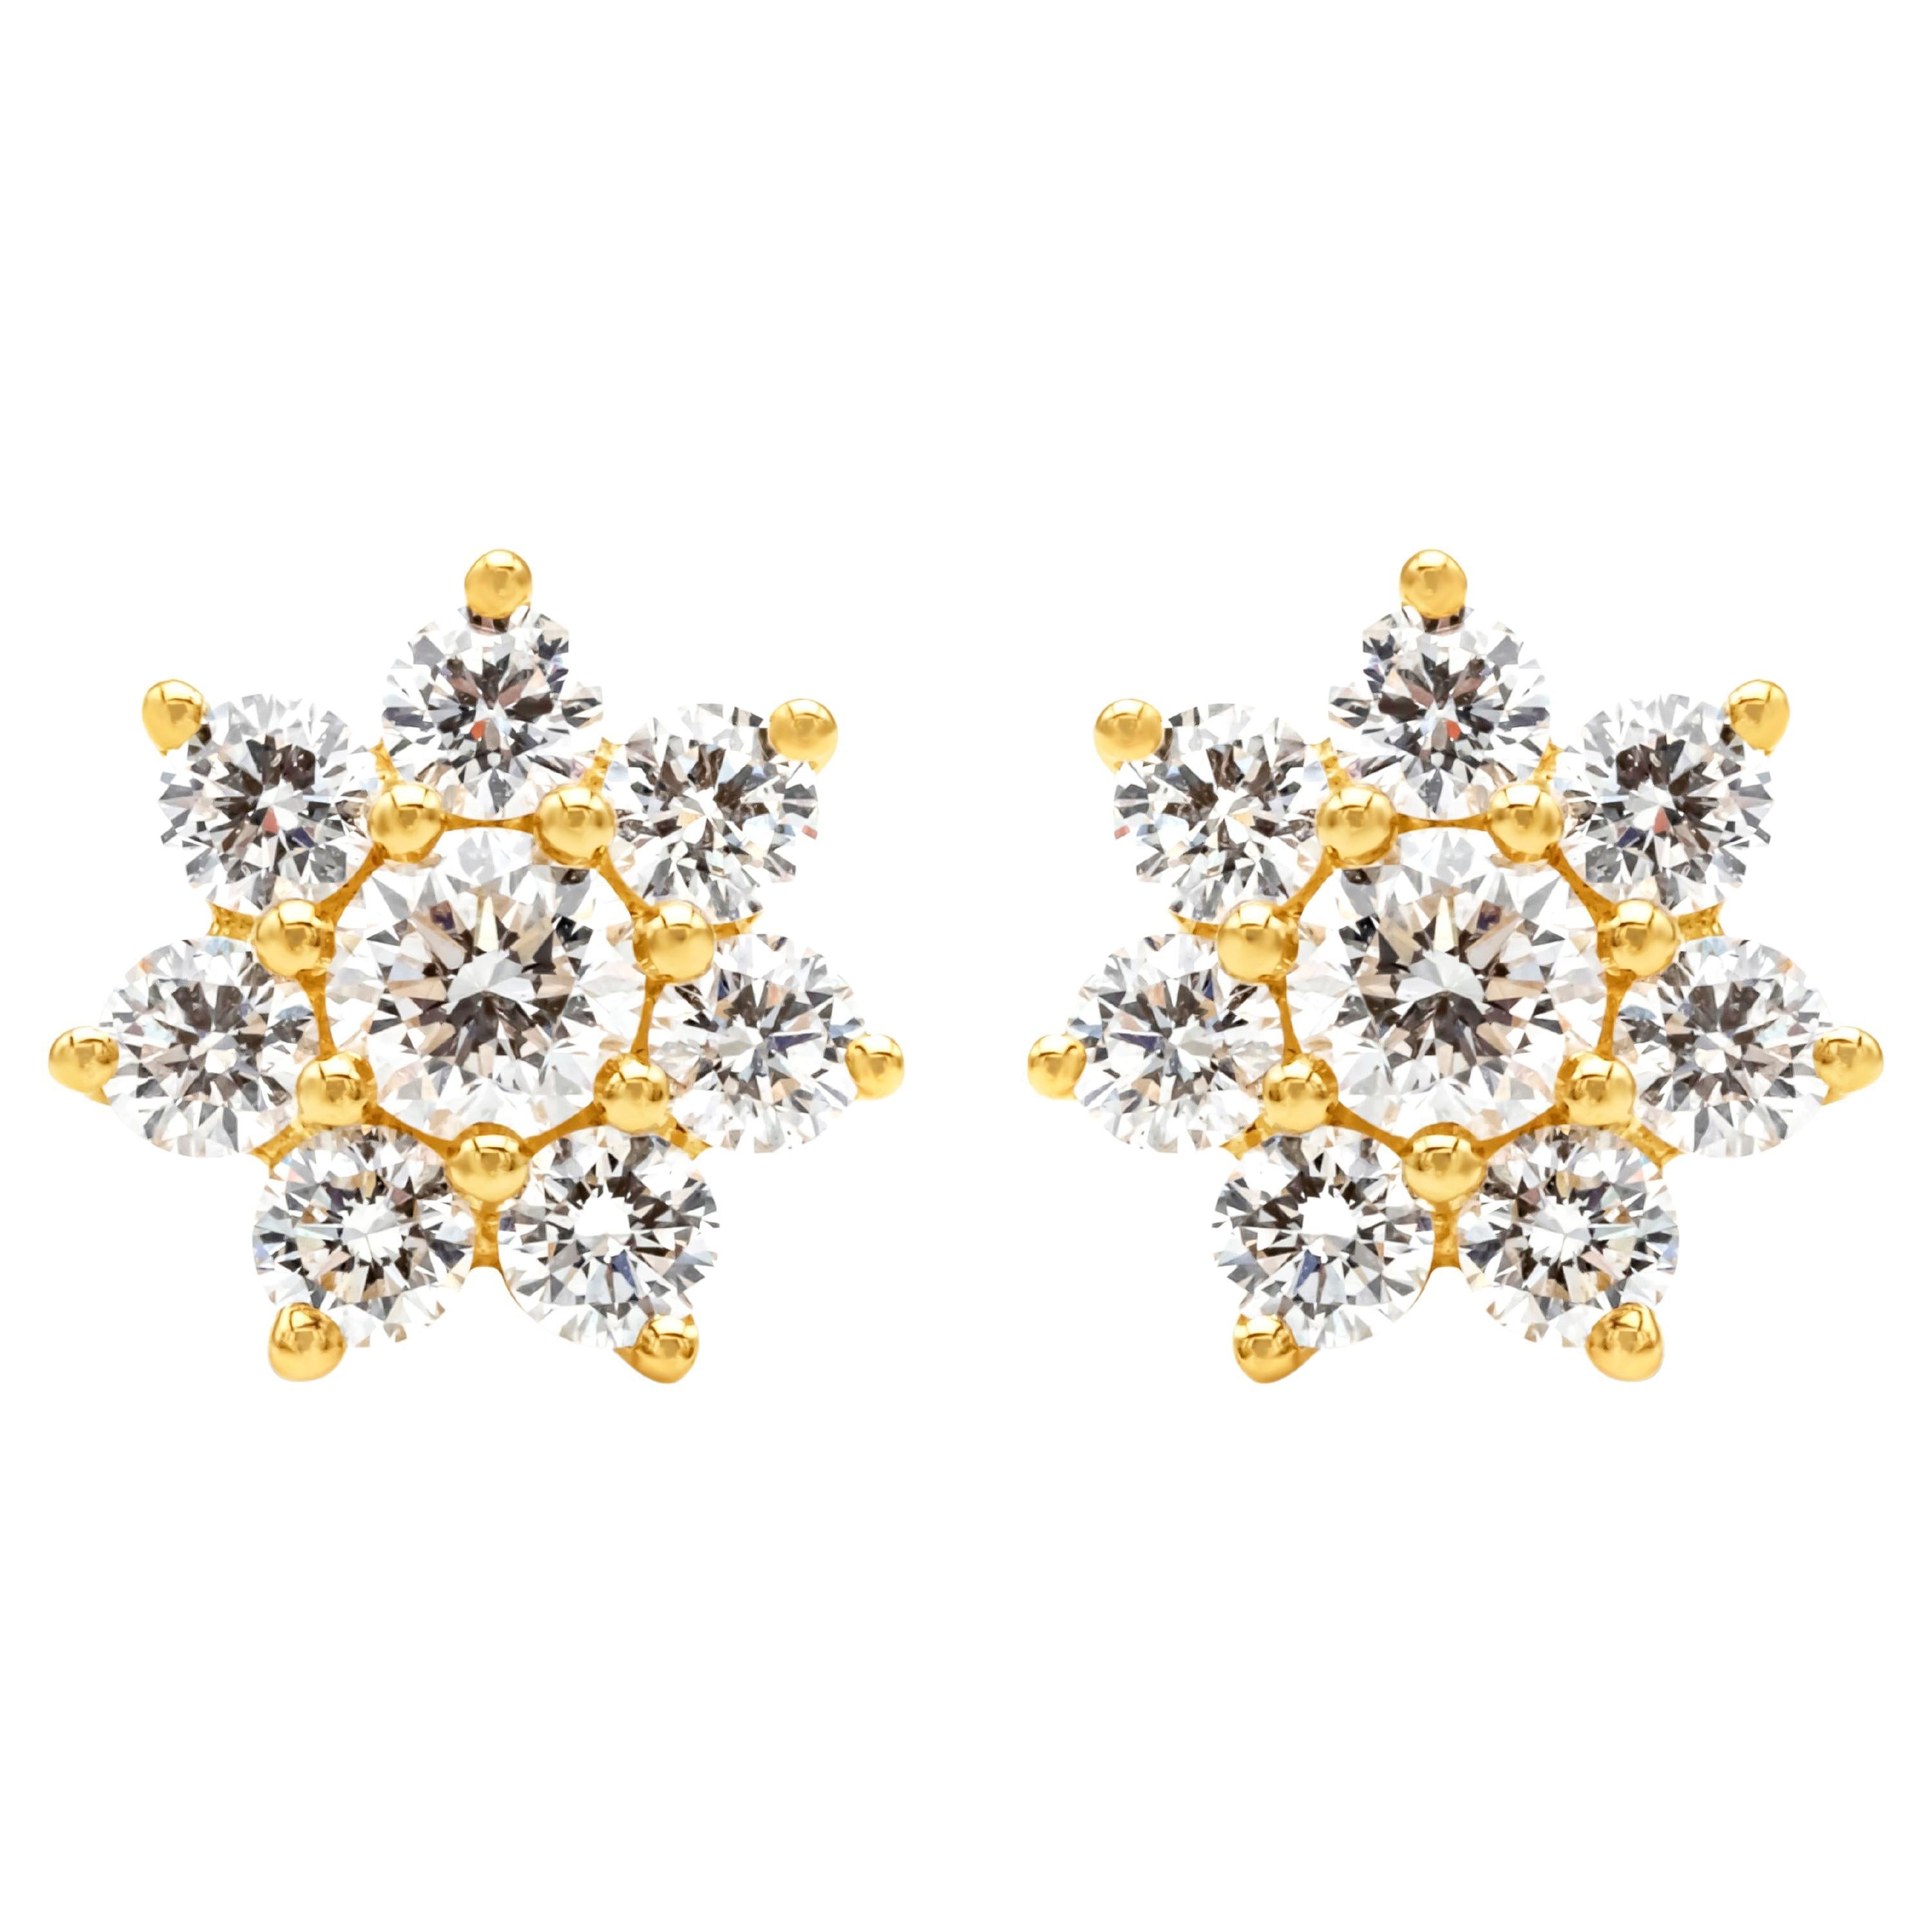 Roman Malakov 1.35 Carats Total Brilliant Round Cut Diamond Flower Stud Earrings For Sale